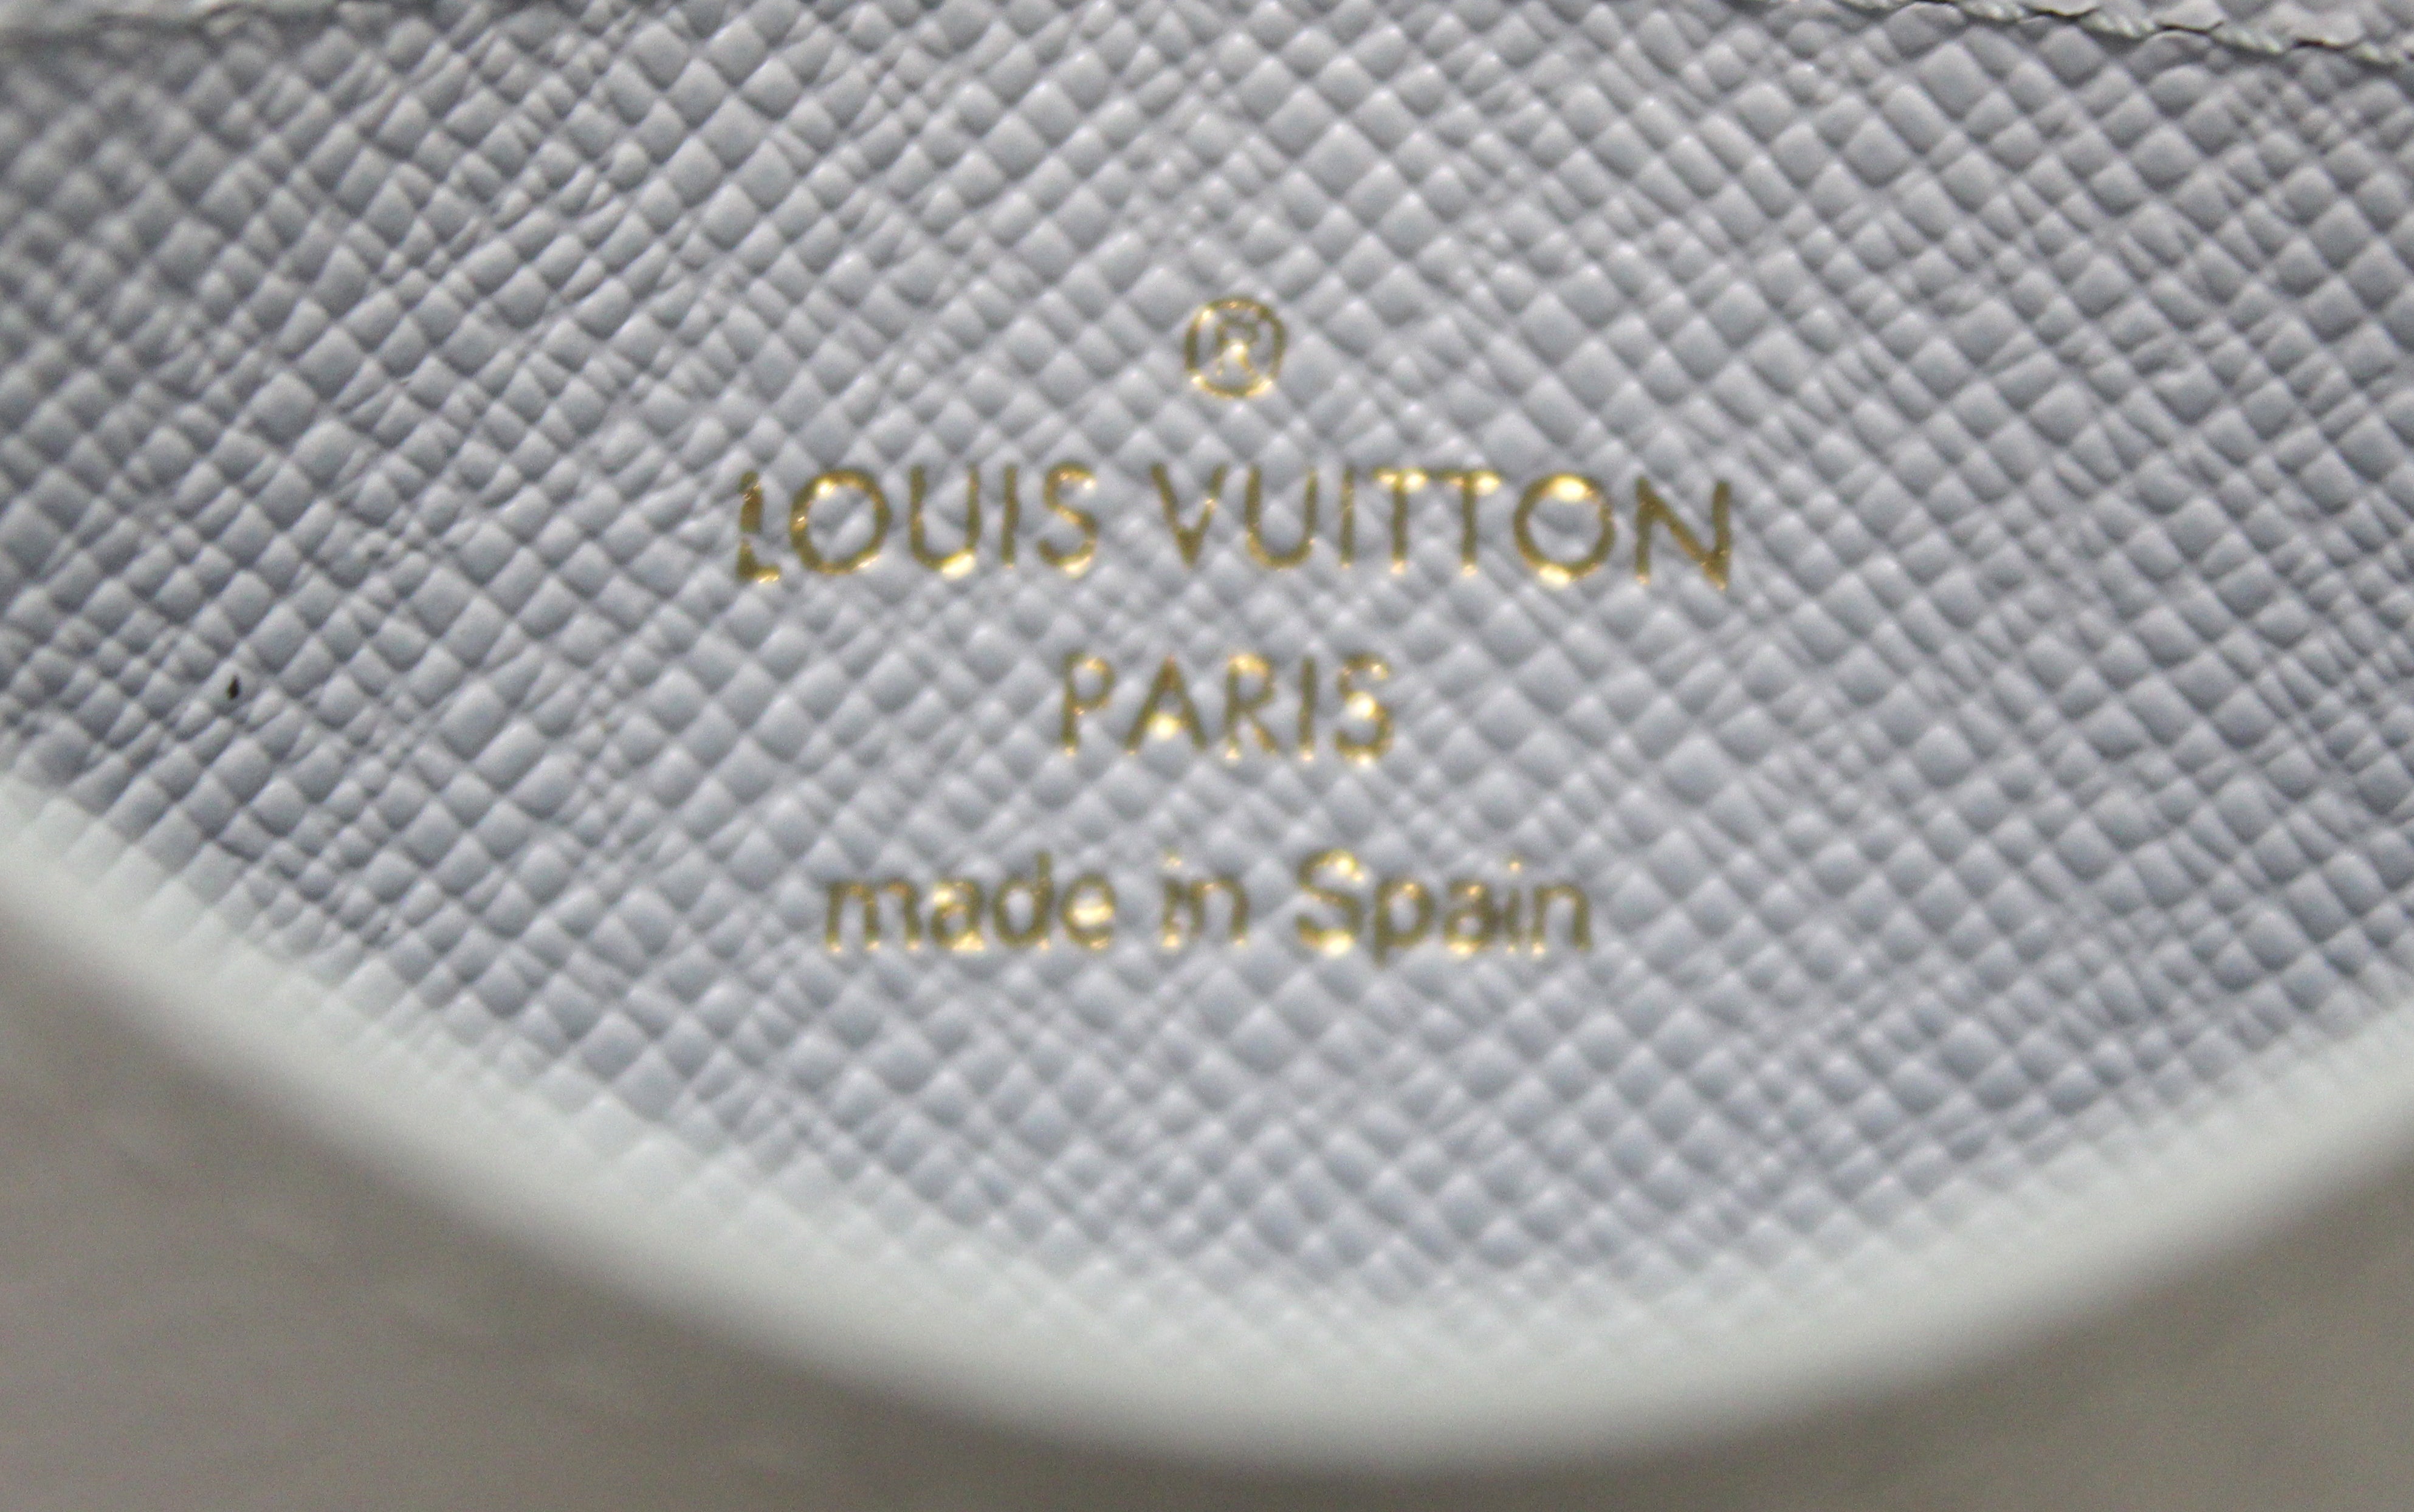 Authentic NEW Louis Vuitton Damier Azur with Blue Leather Cardholder